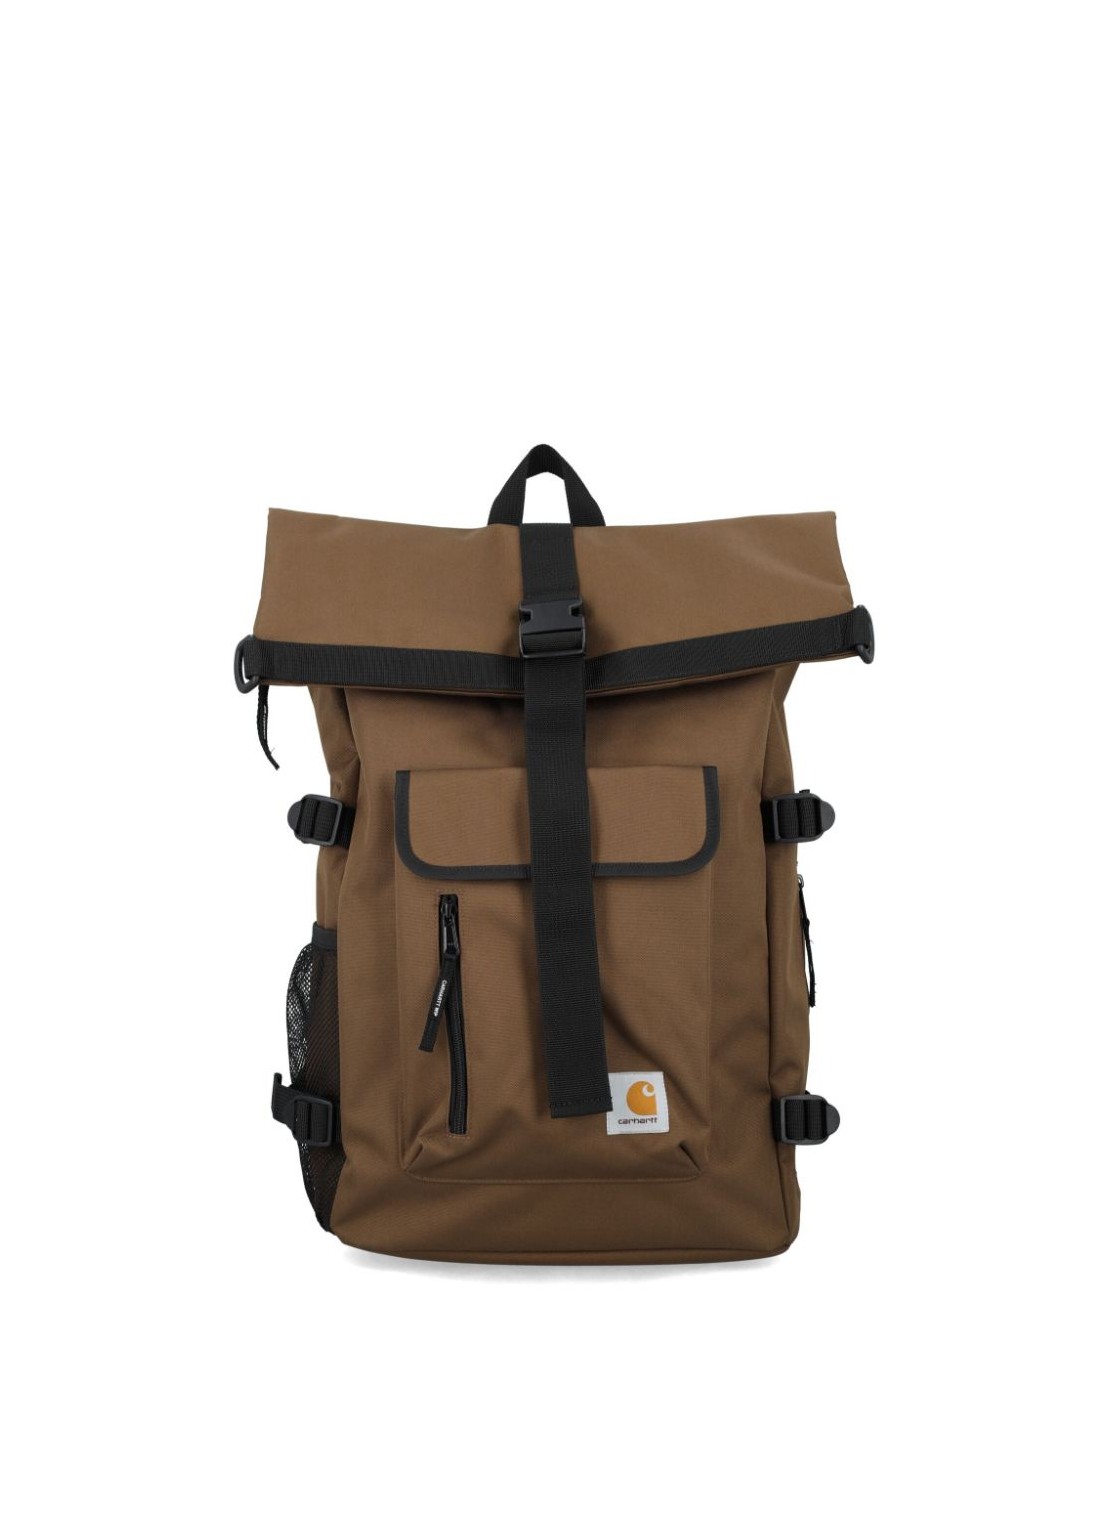 Viaje carhartt luggage manphilis backpack - i031575 1zdxx talla marron
 